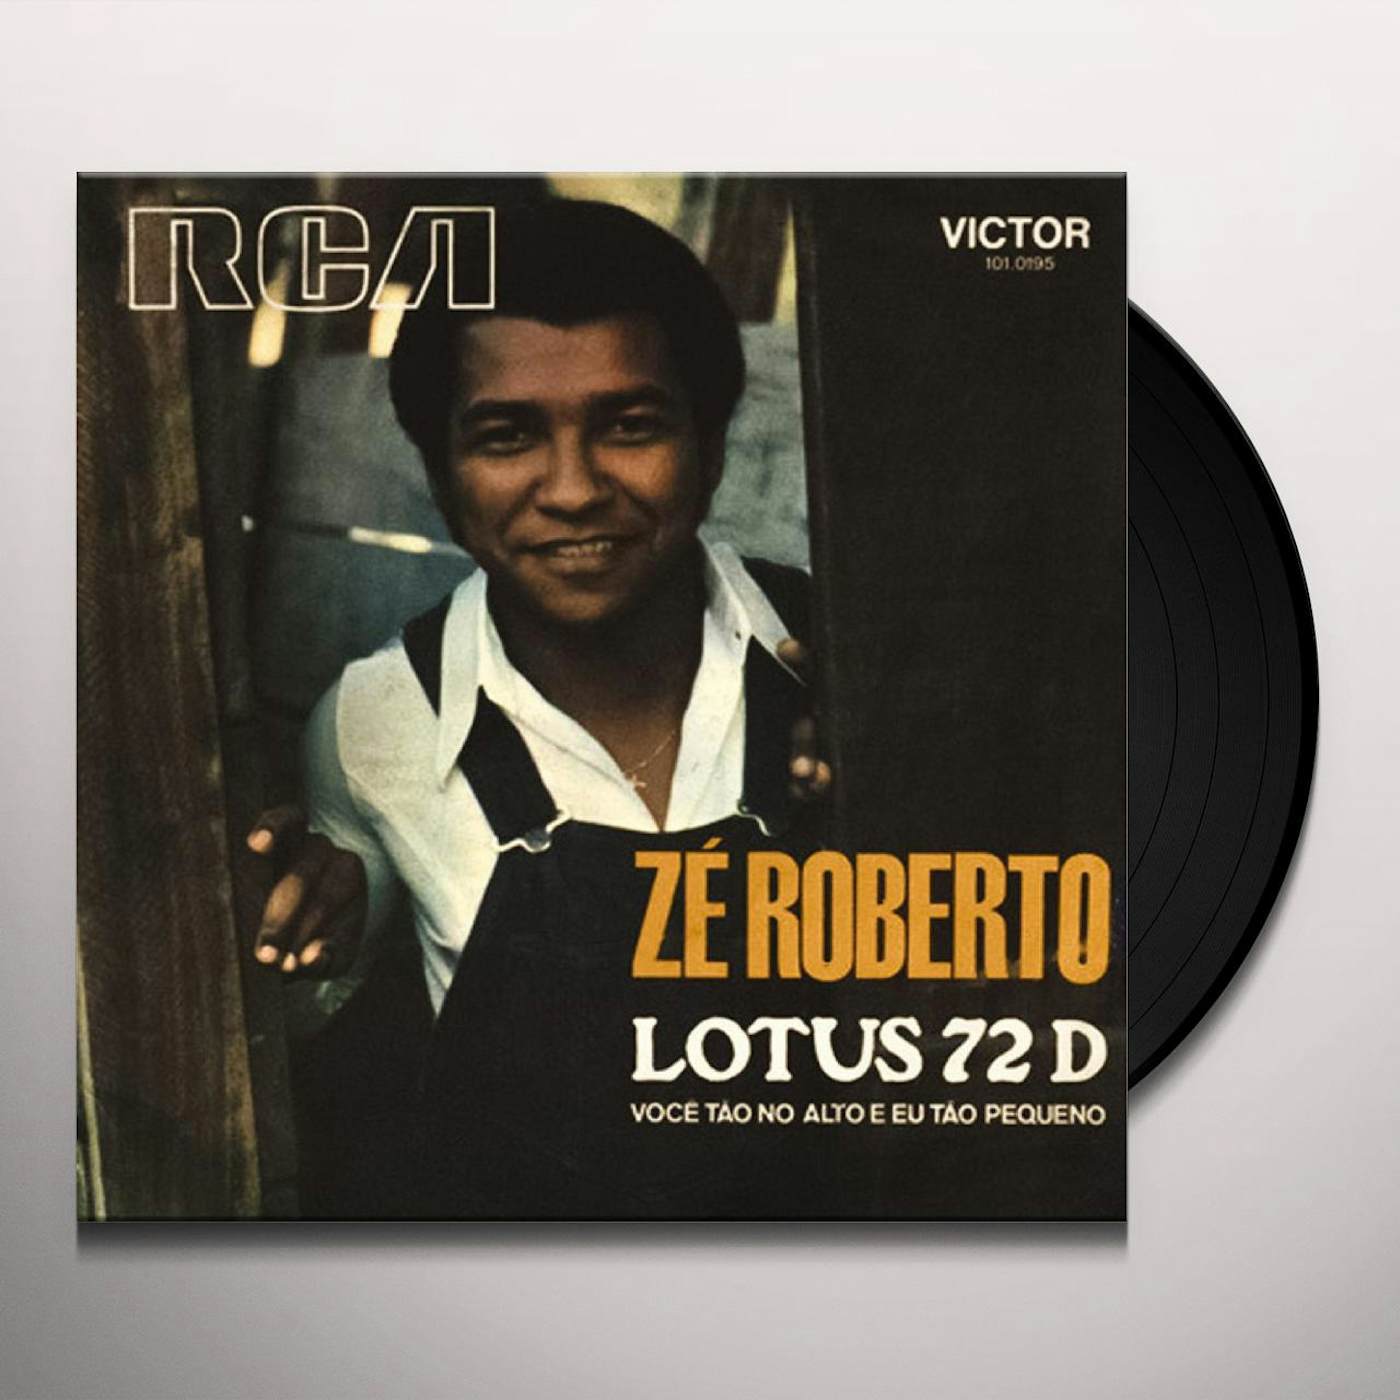 Ze Roberto Lotus 72 D Vinyl Record